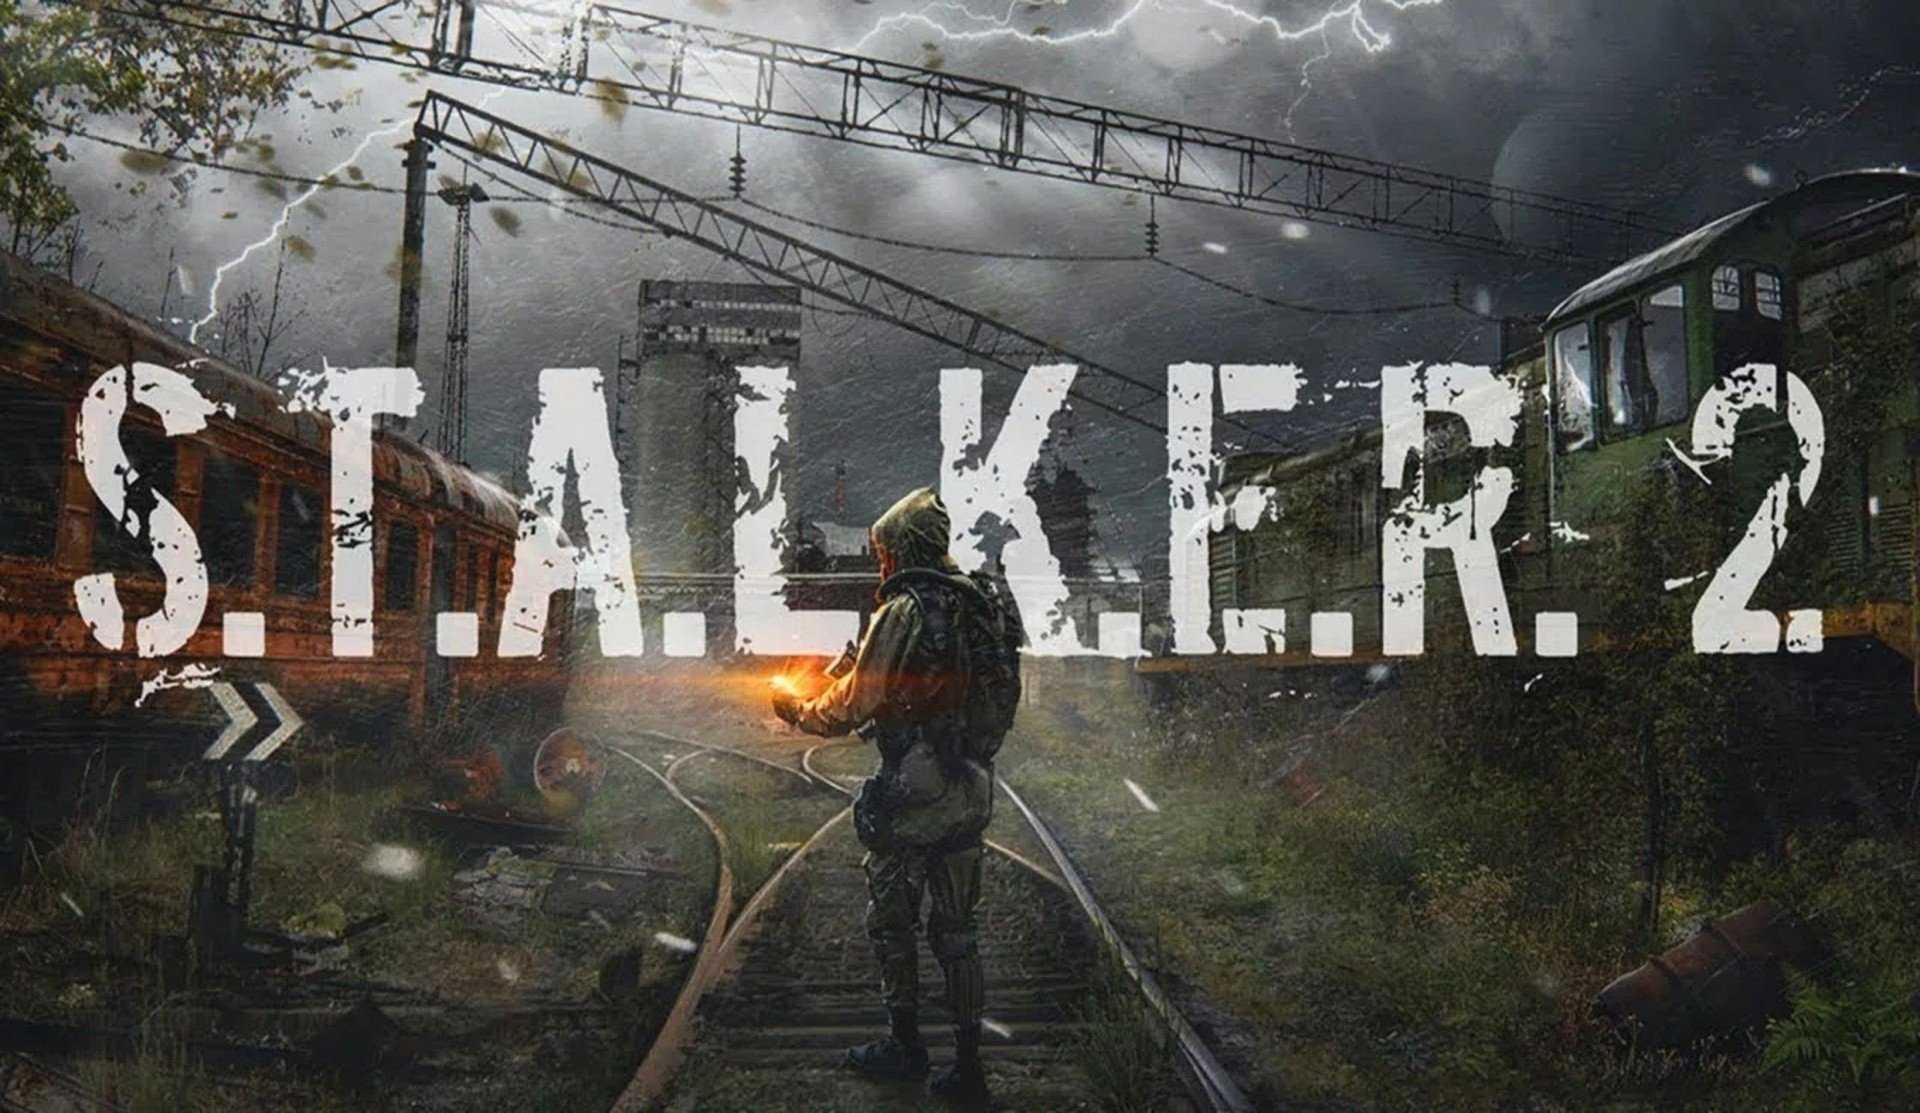 S.t.a.l.k.e.r. 2: heart of chernobyl - основные особенности и системные требования - новости s.t.a.l.k.e.r. 2 - ap-pro.ru | новости stalker | скачать моды stalker | s.t.a.l.k.e.r. 2 | сталкер моды